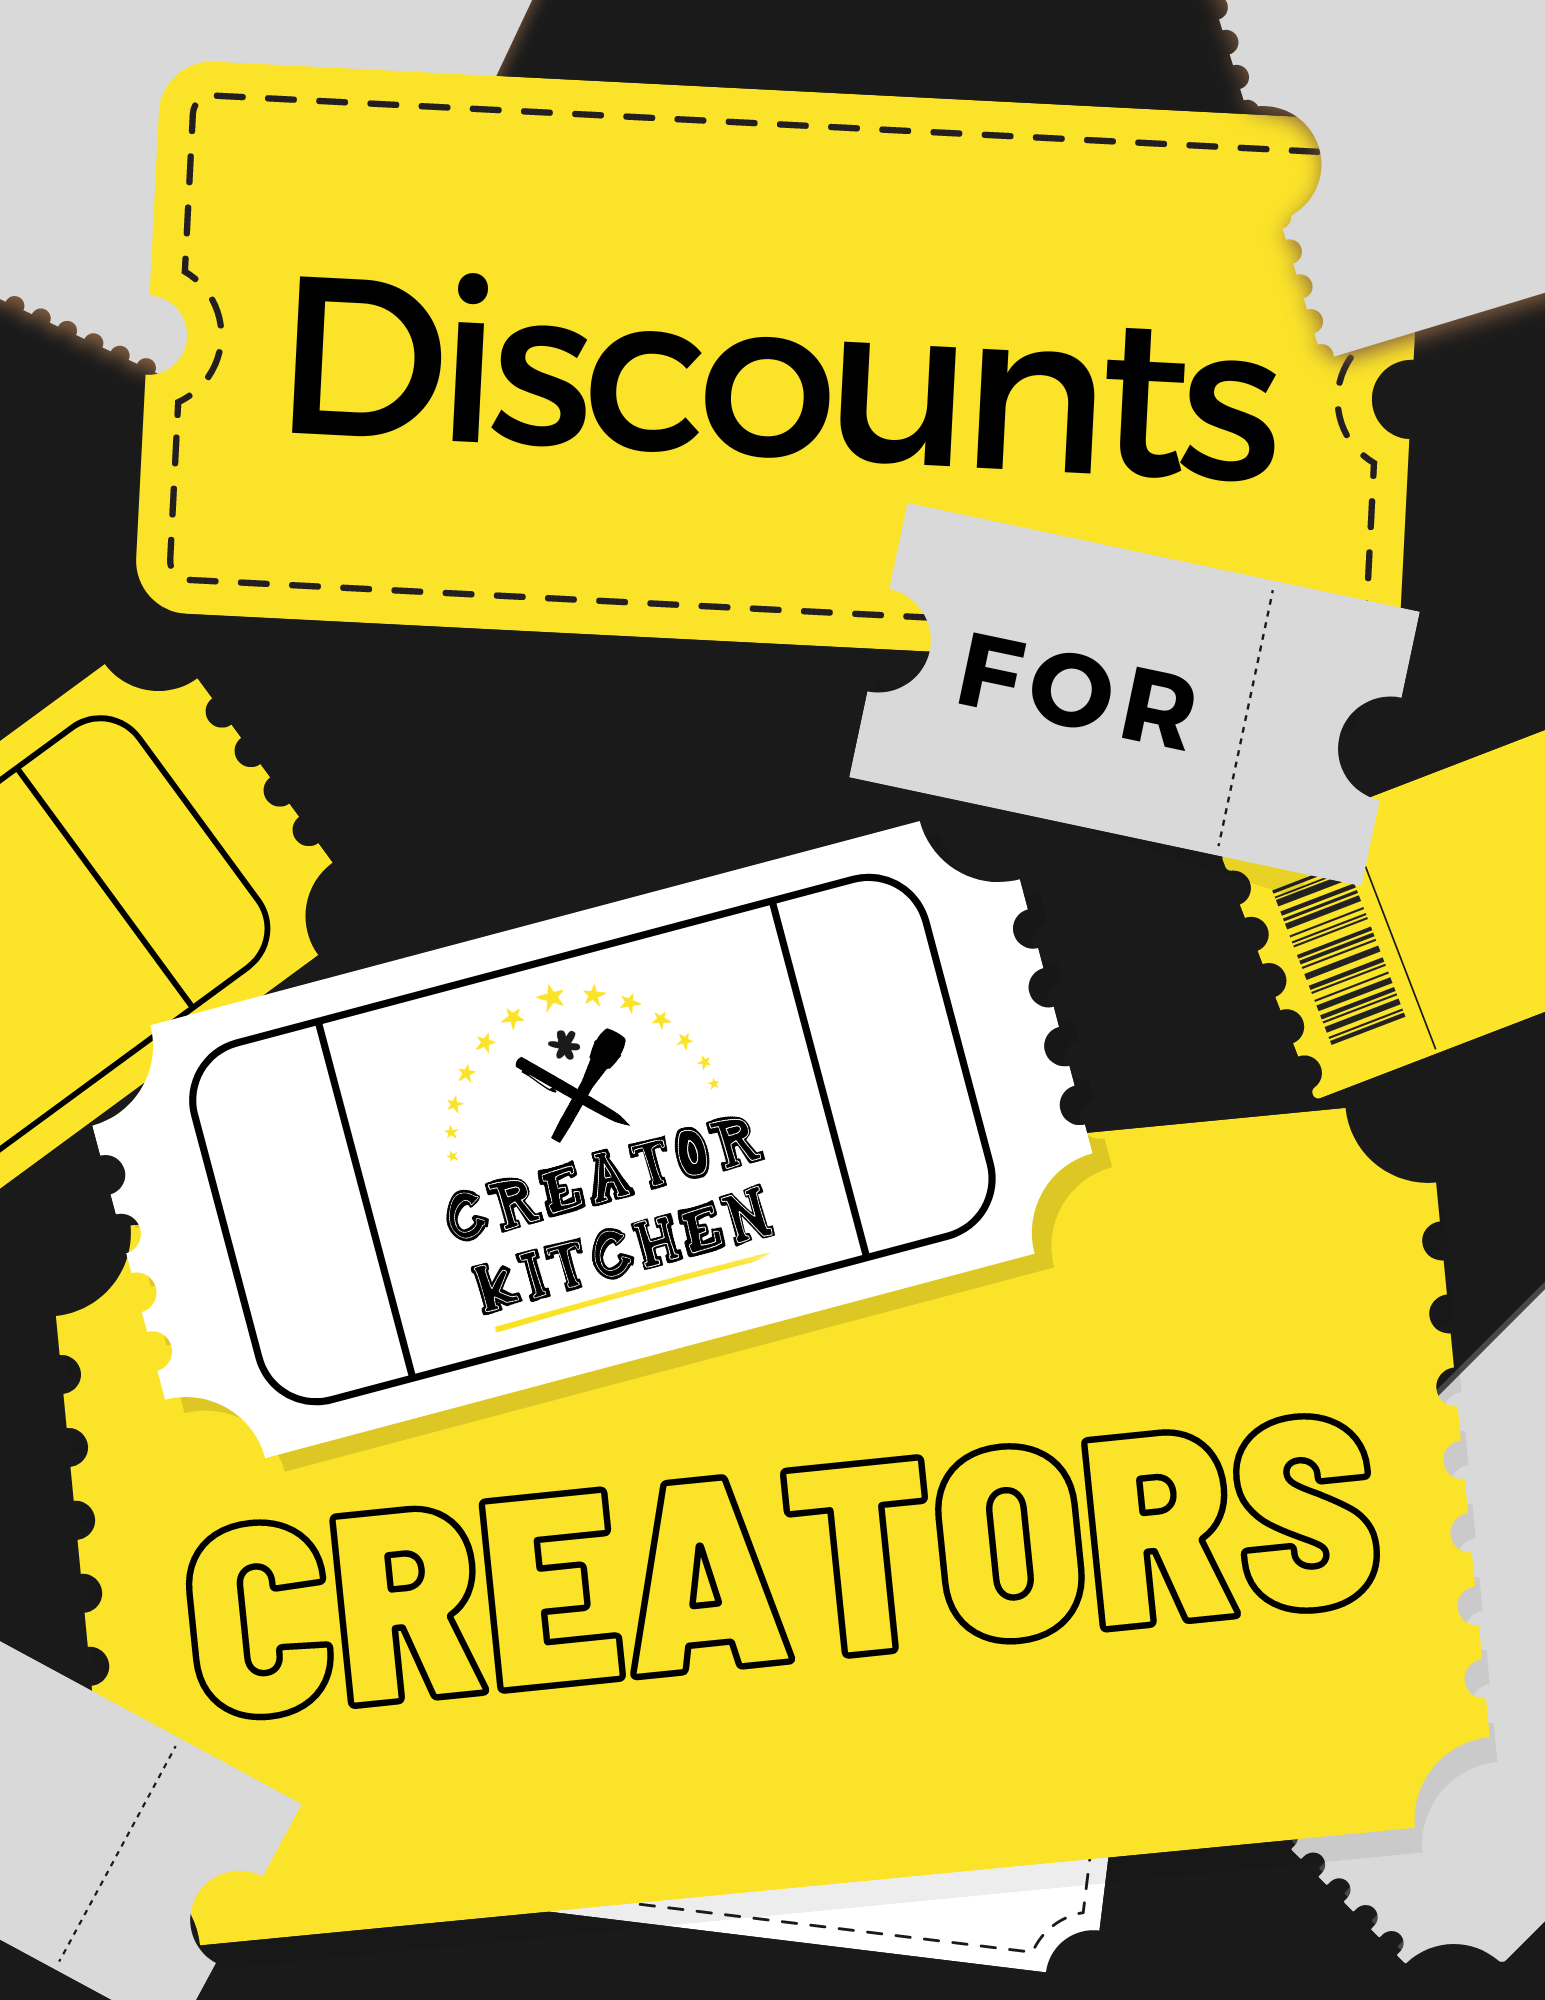 Discounts on Creative Tools